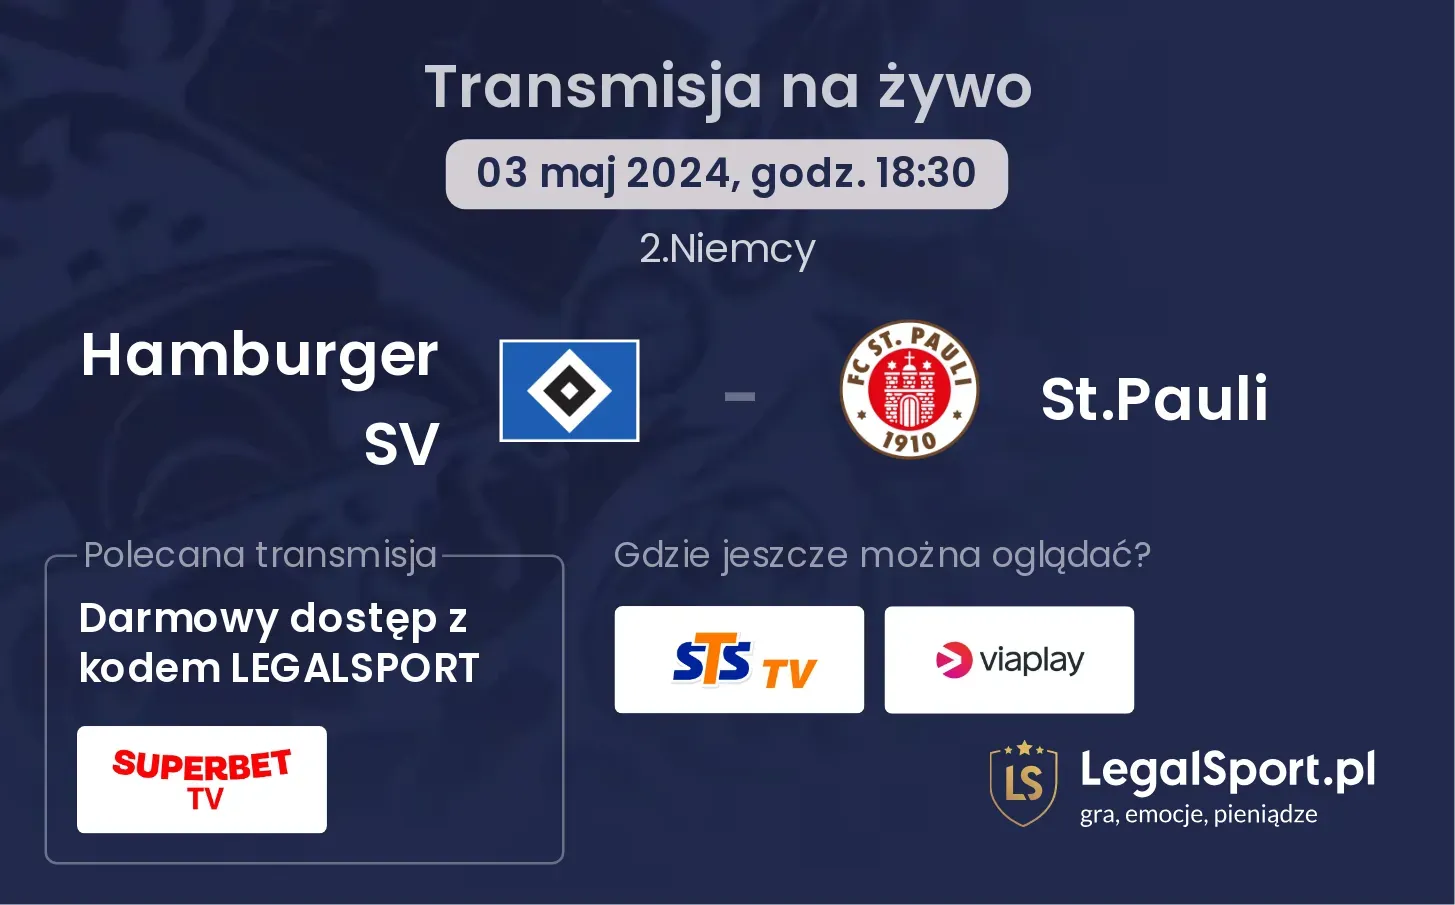 HSV - St.Pauli